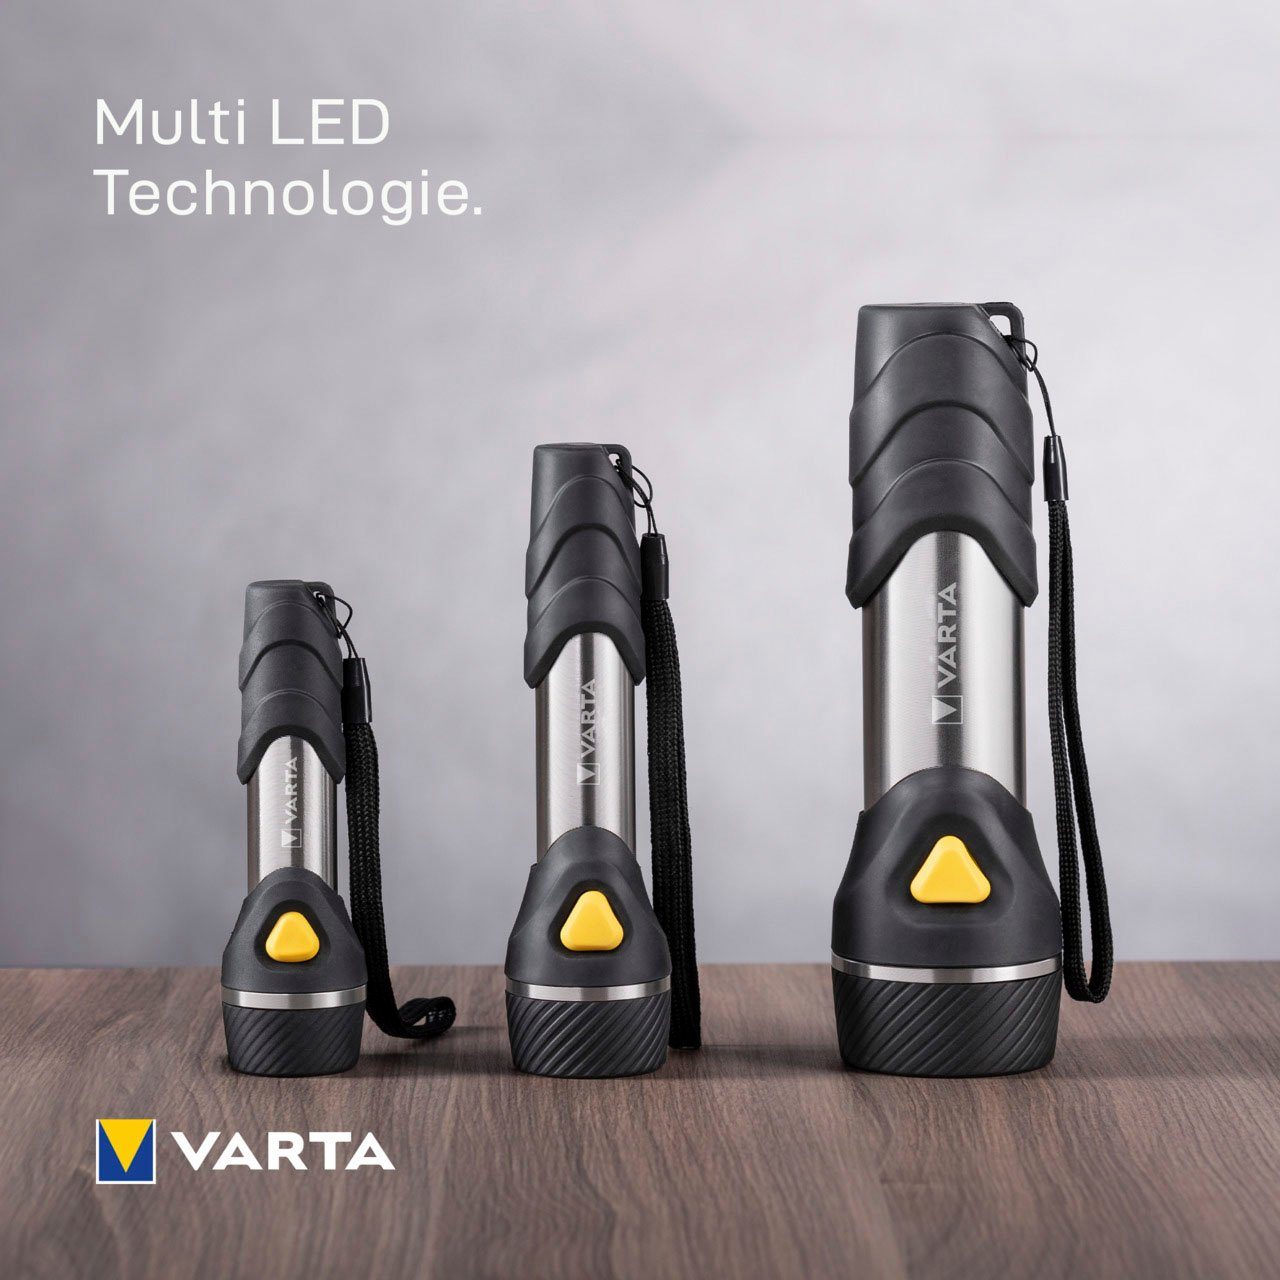 VARTA Taschenlampe F10 LED Day Multi 5 LEDs mit Light Taschenlampe VARTA